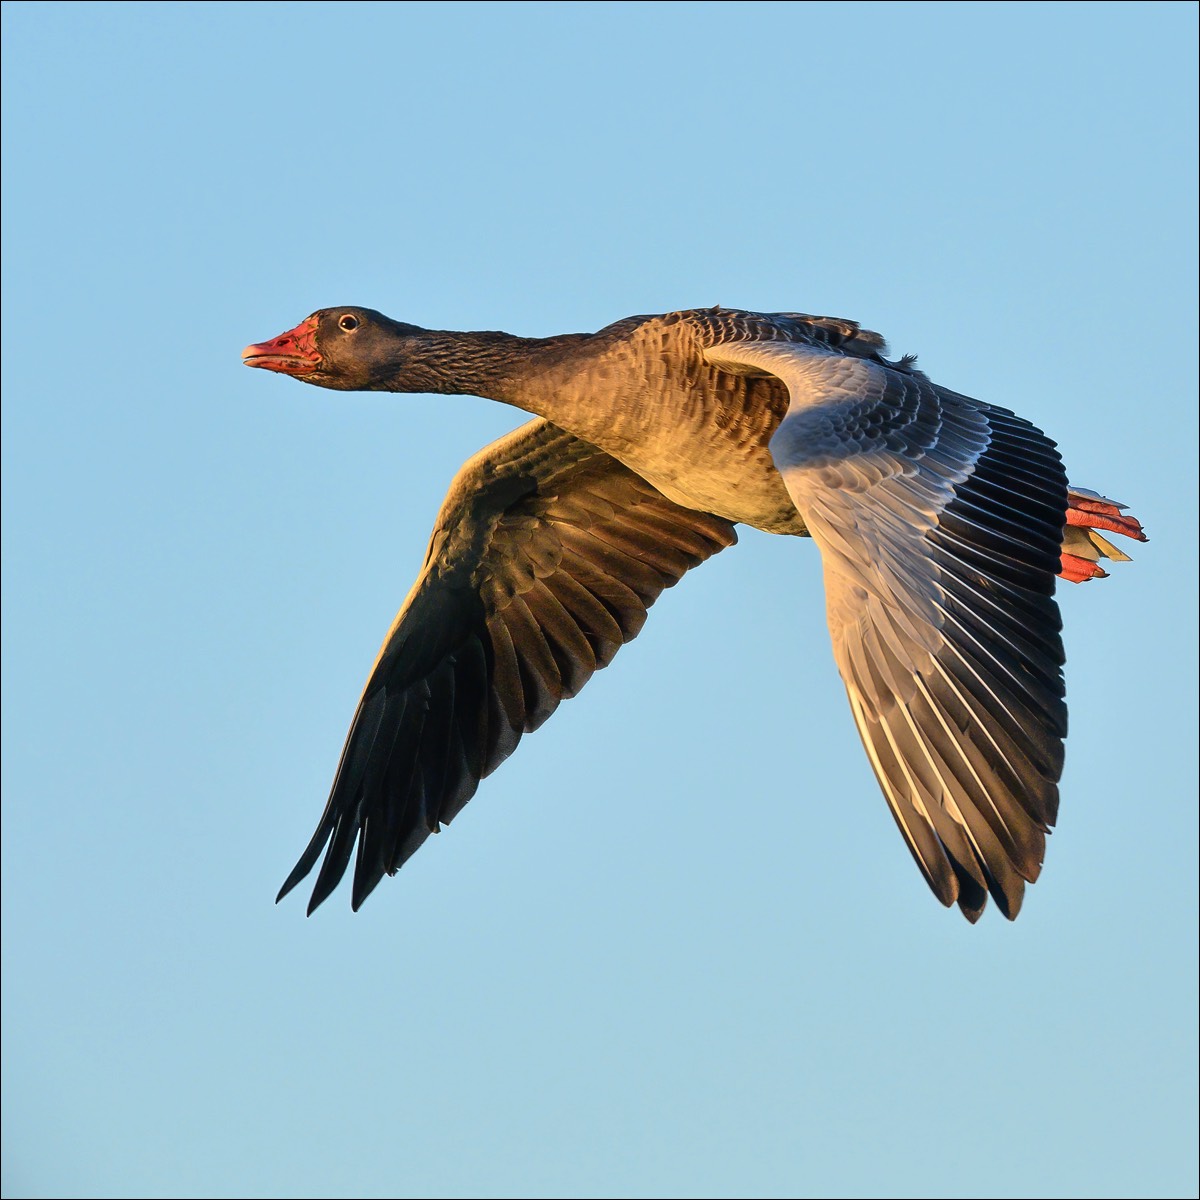 Greylag Goose (Grauwe Gans) - Uitkerke (Belgium) - 23/10/21